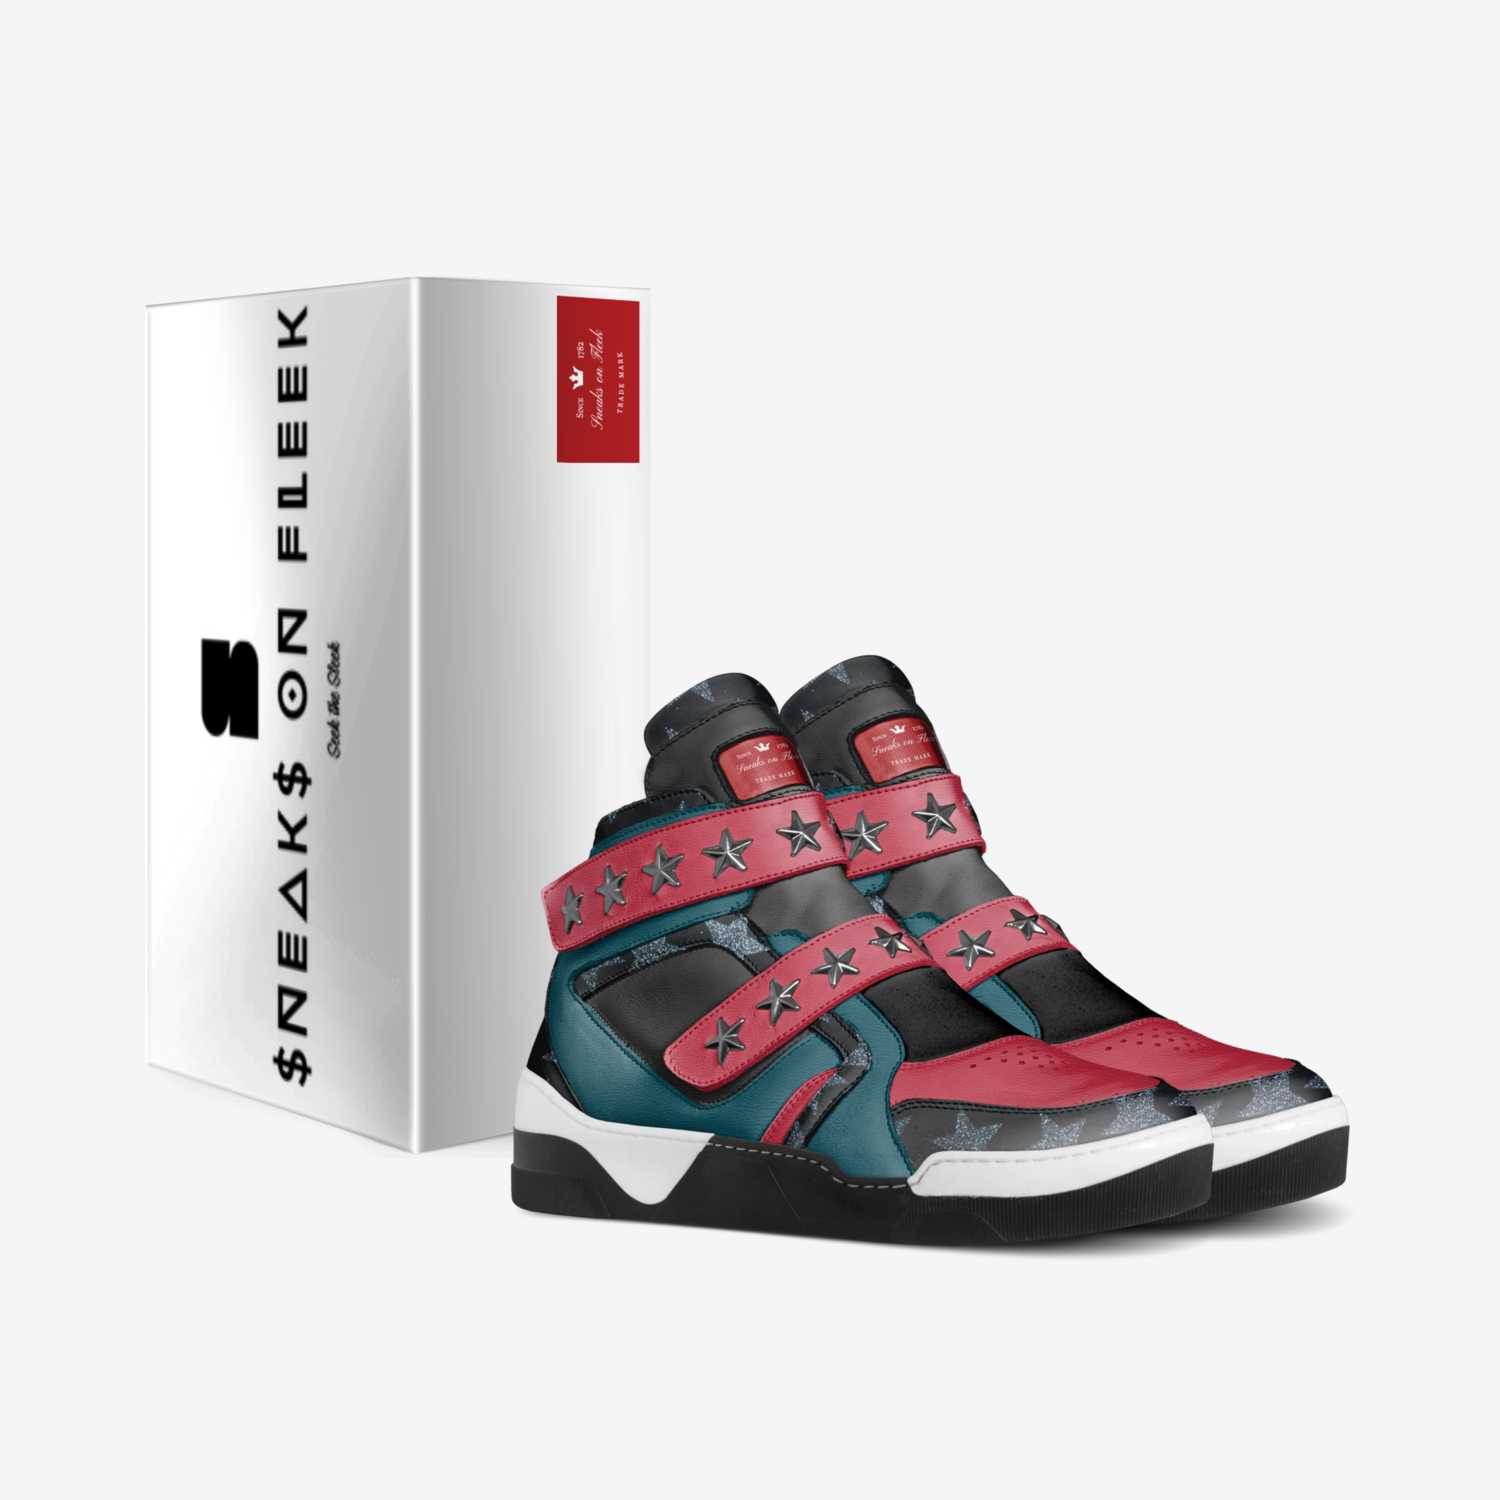 Sneaks on Fleek custom made in Italy shoes by Ryan Viloria | Box view